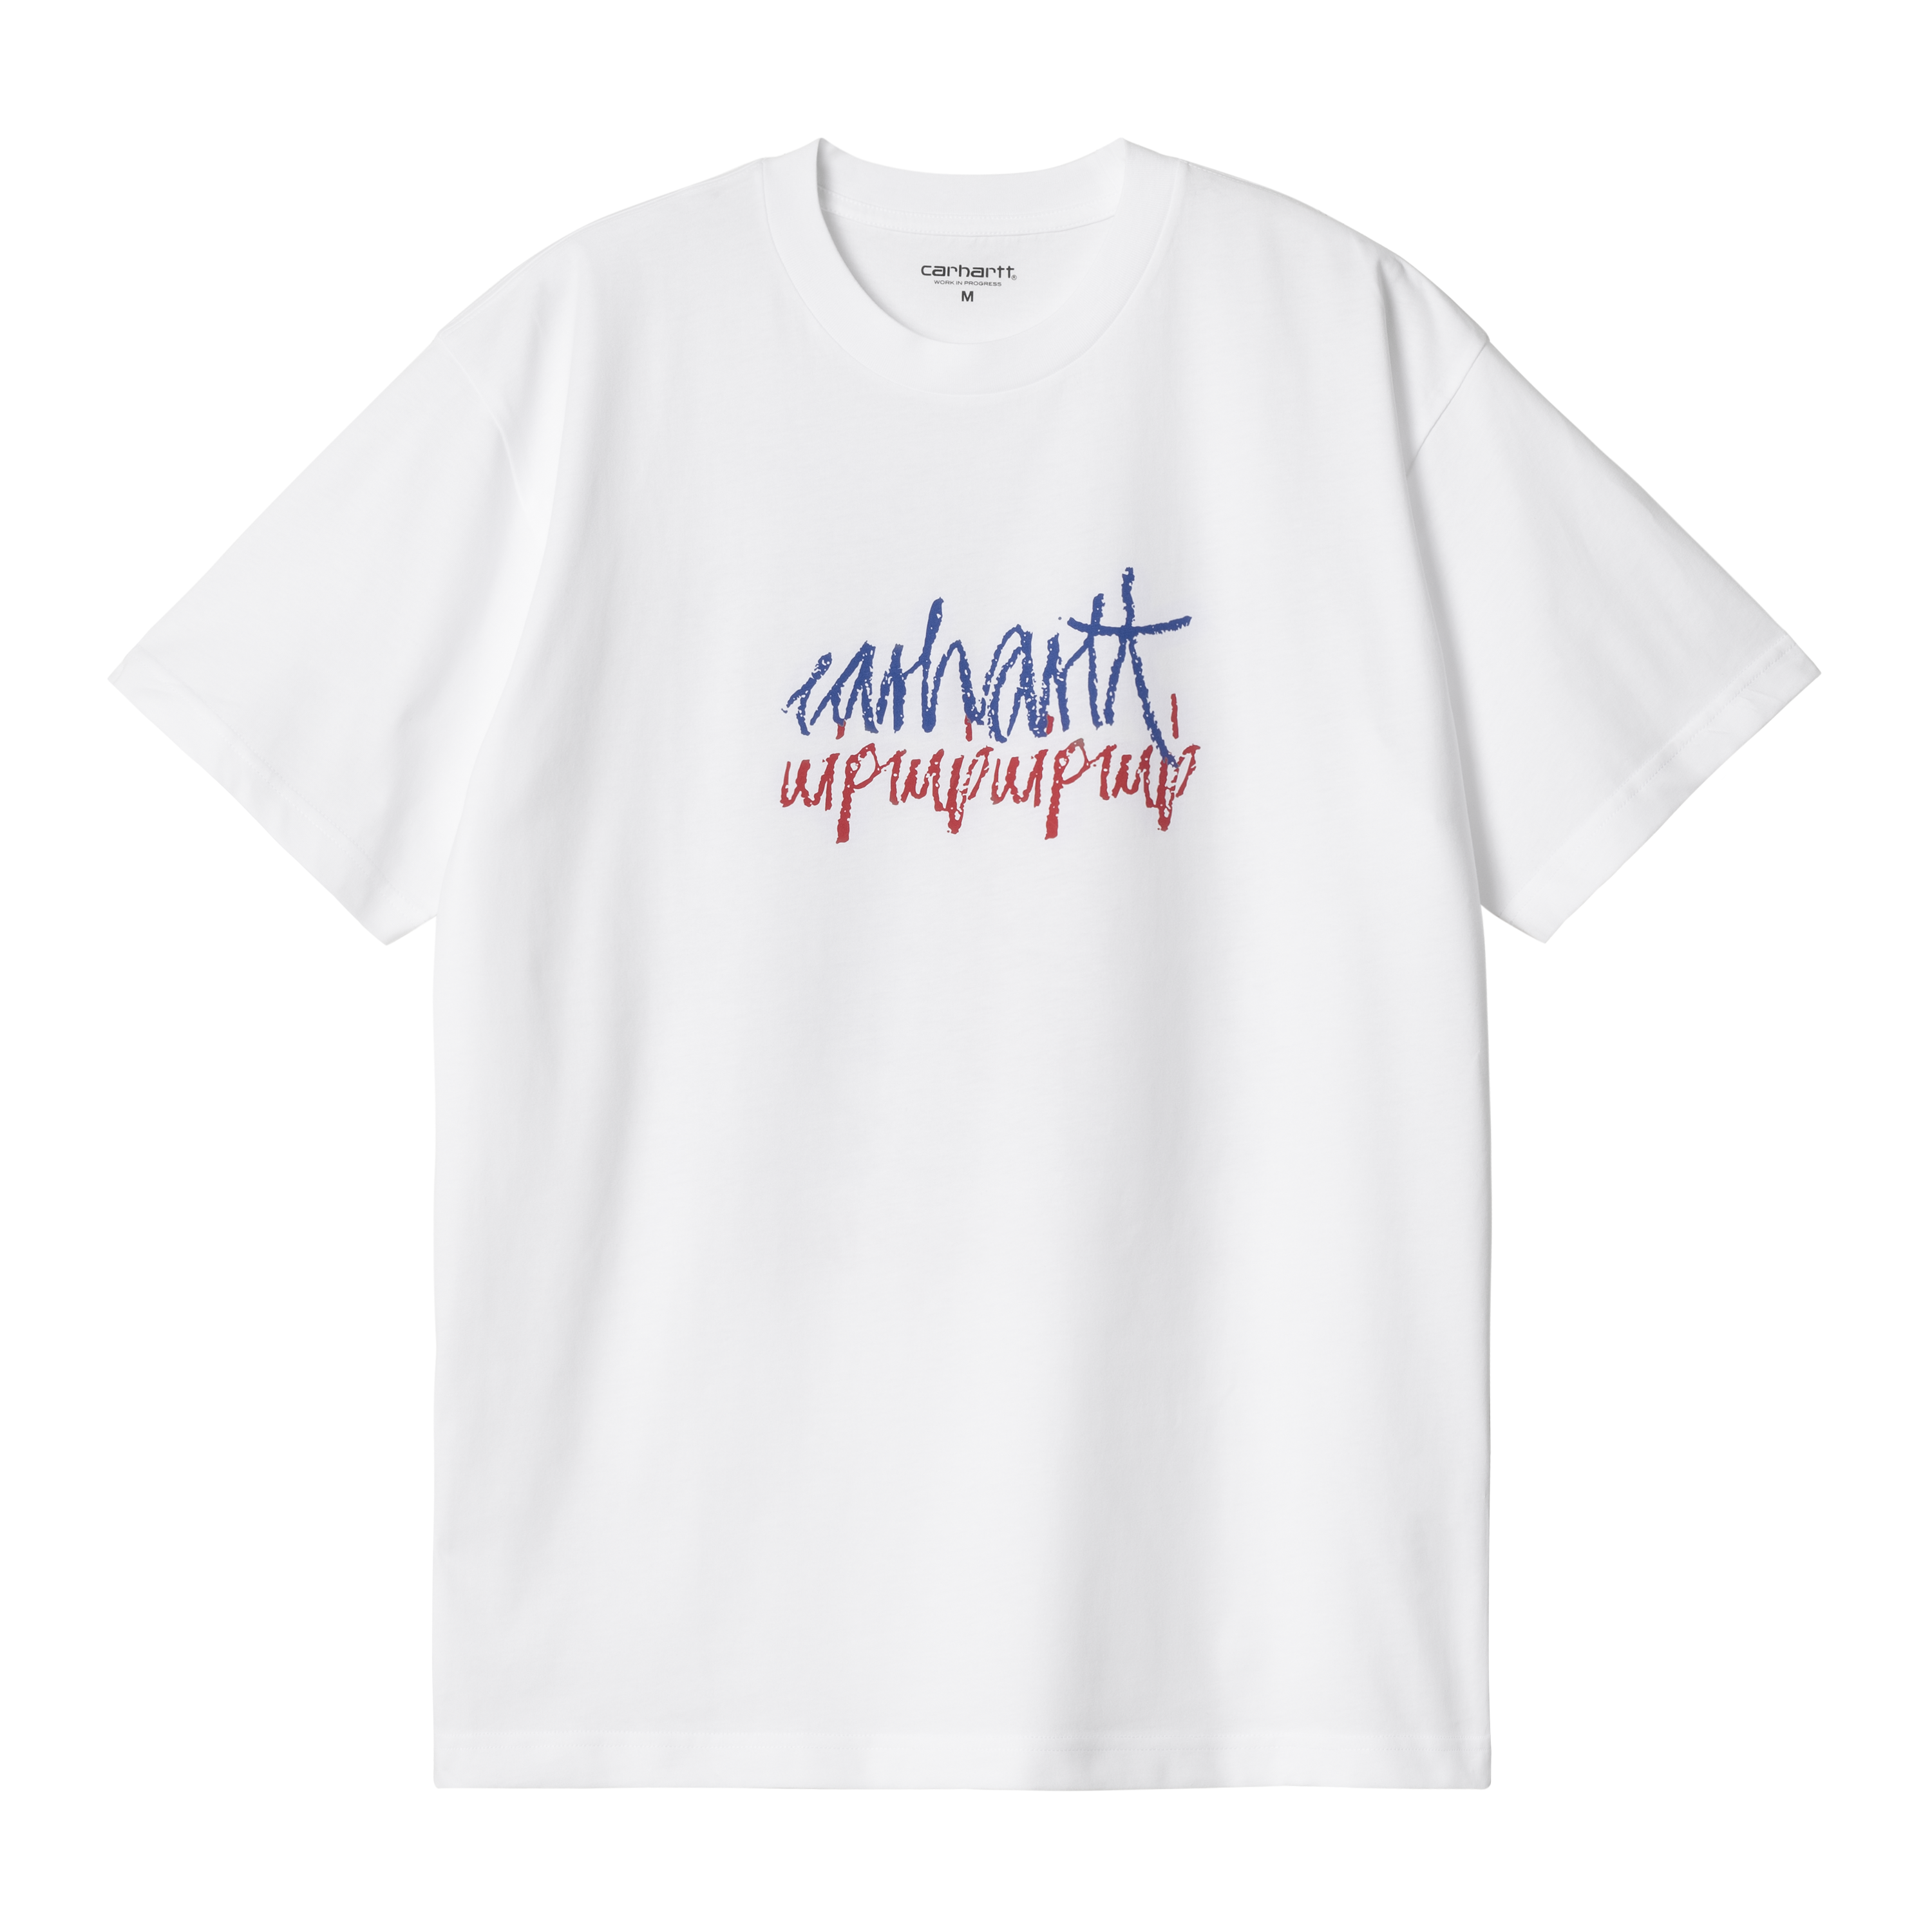 Carhartt WIP Short Sleeve Stereo T-Shirt in White